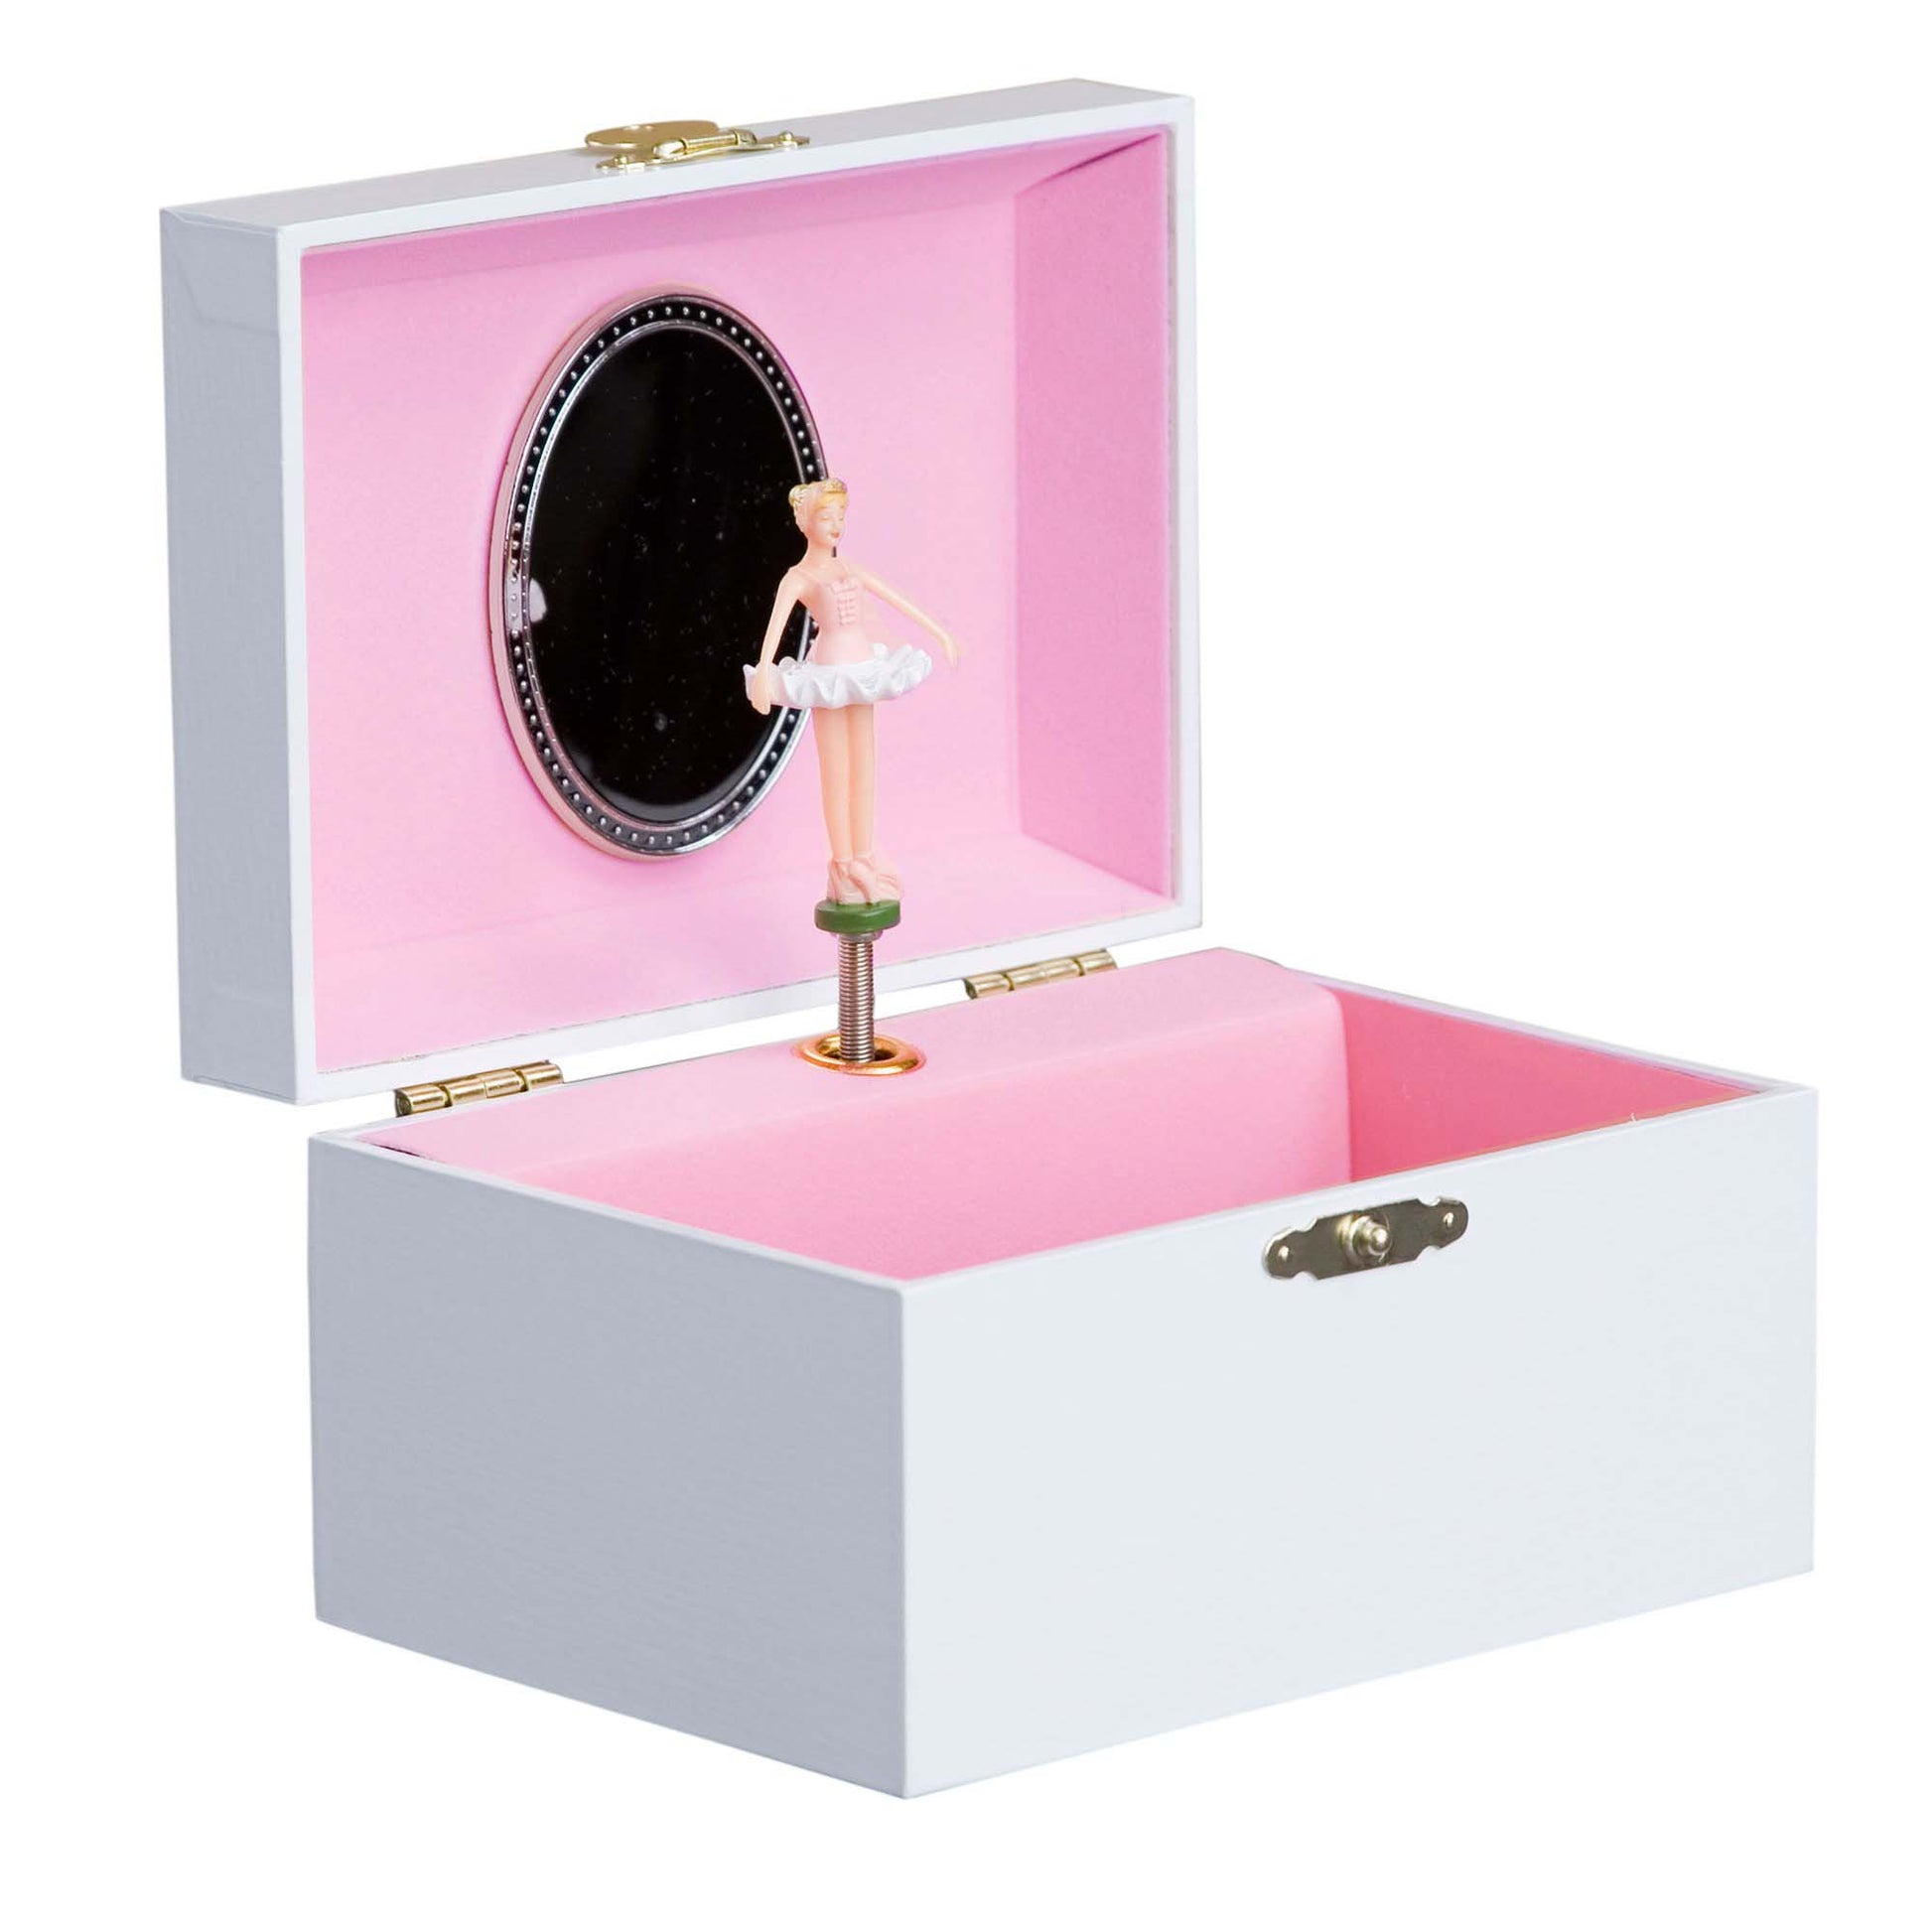 Personalized Ballerina Jewelry Box with Field Hockey design